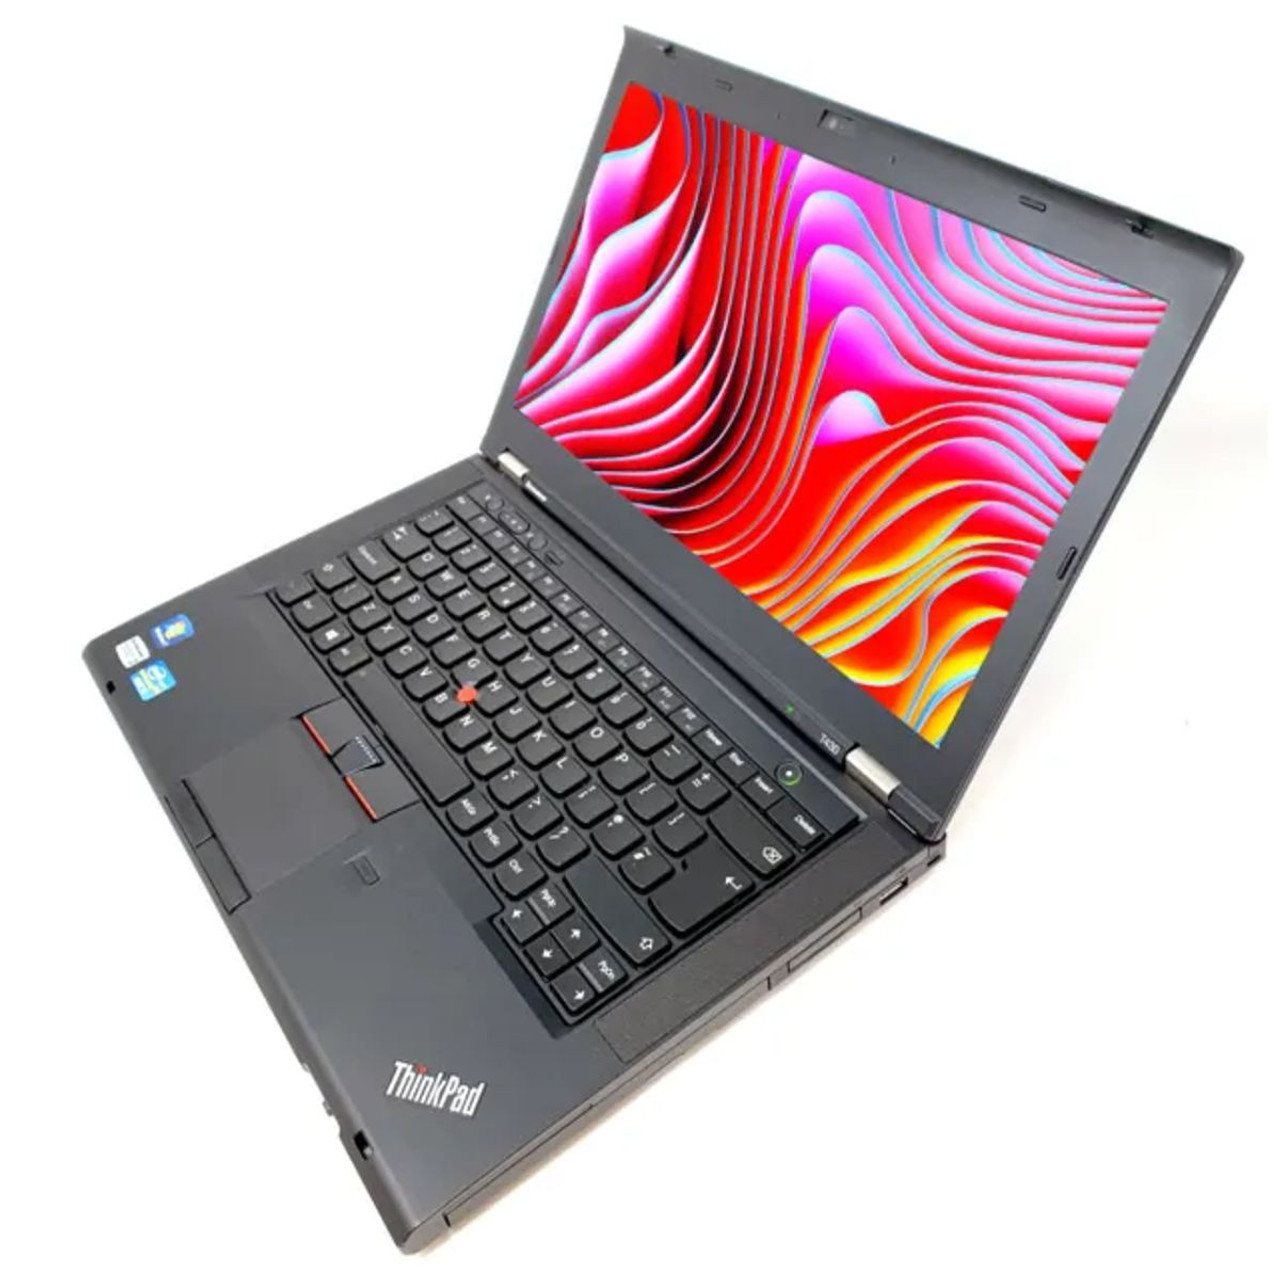 Lenovo® ThinkPad Laptop, Core i5, 8GB RAM, 128GB SSD, T430 product image